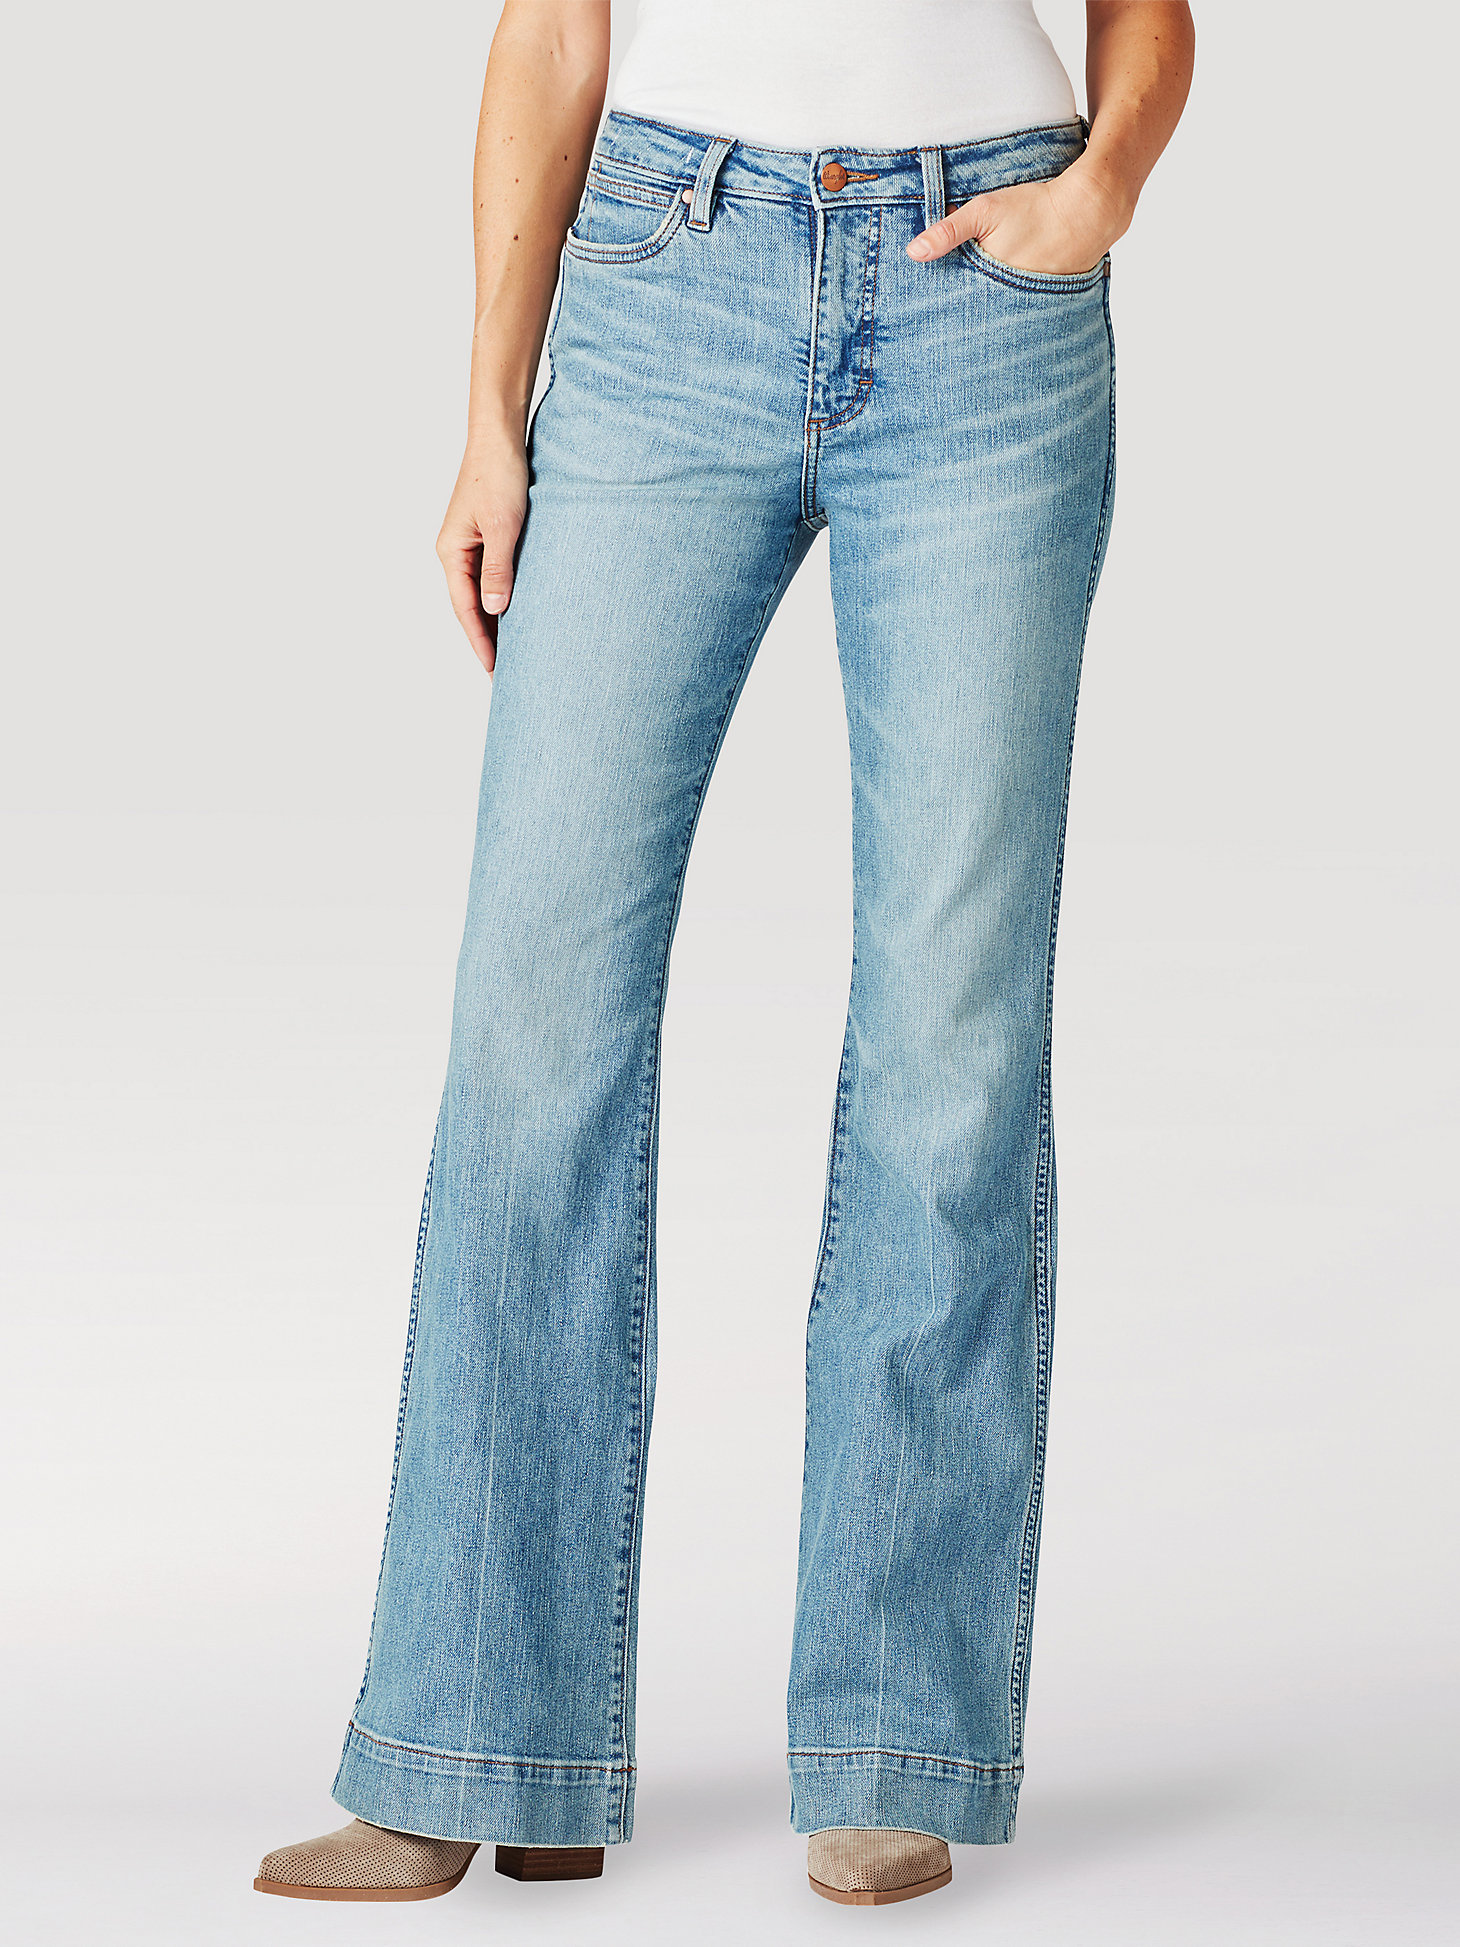 The Wrangler Retro® Premium Jean: Women's High Rise Trouser in Emma alternative view 1